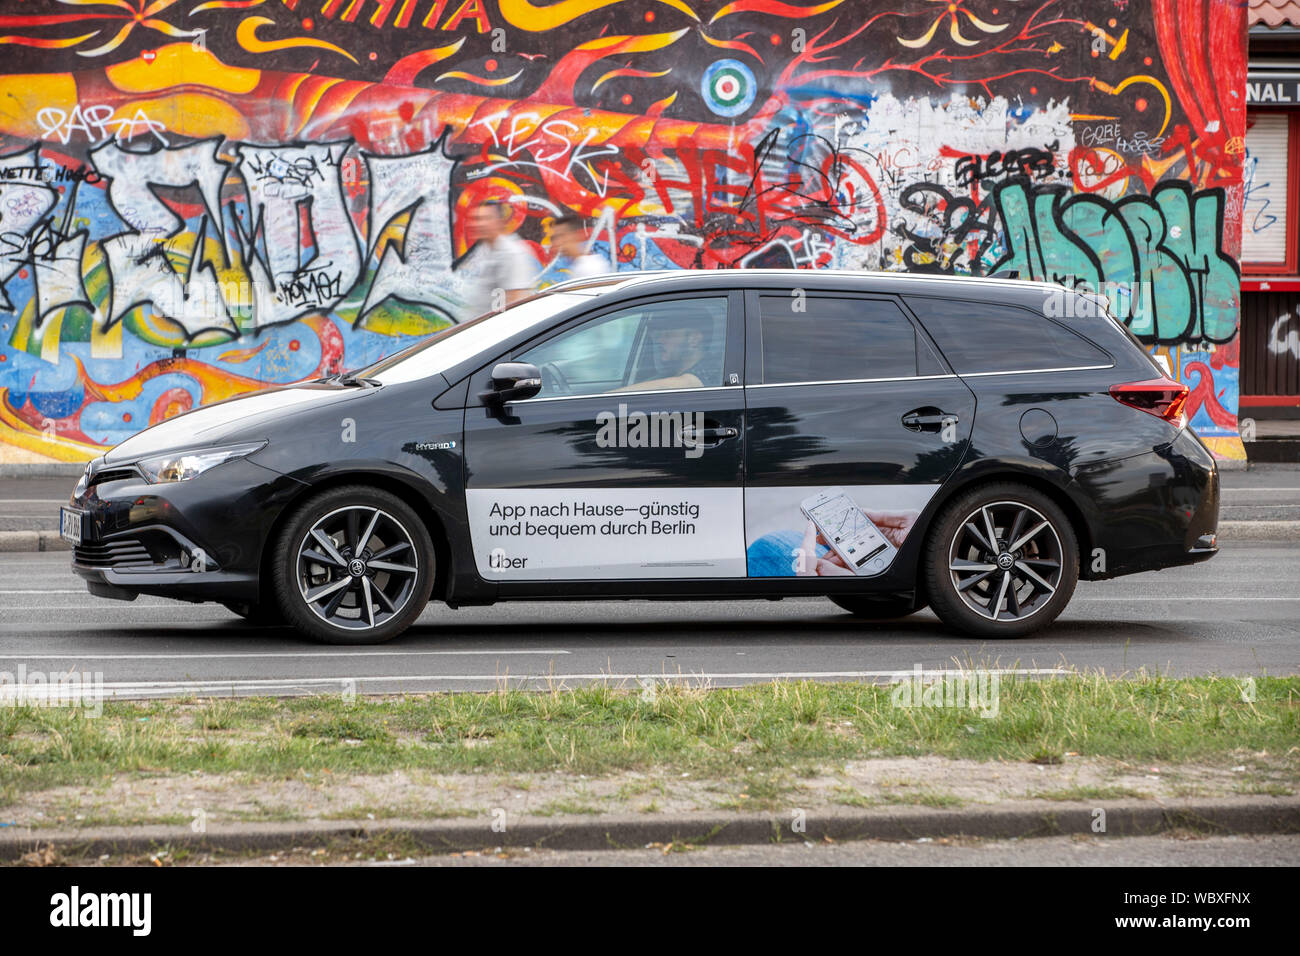 Fahrzeug des Uber Fahrdienst, Taxi, Chauffeur Service, Berlin, Stockfoto